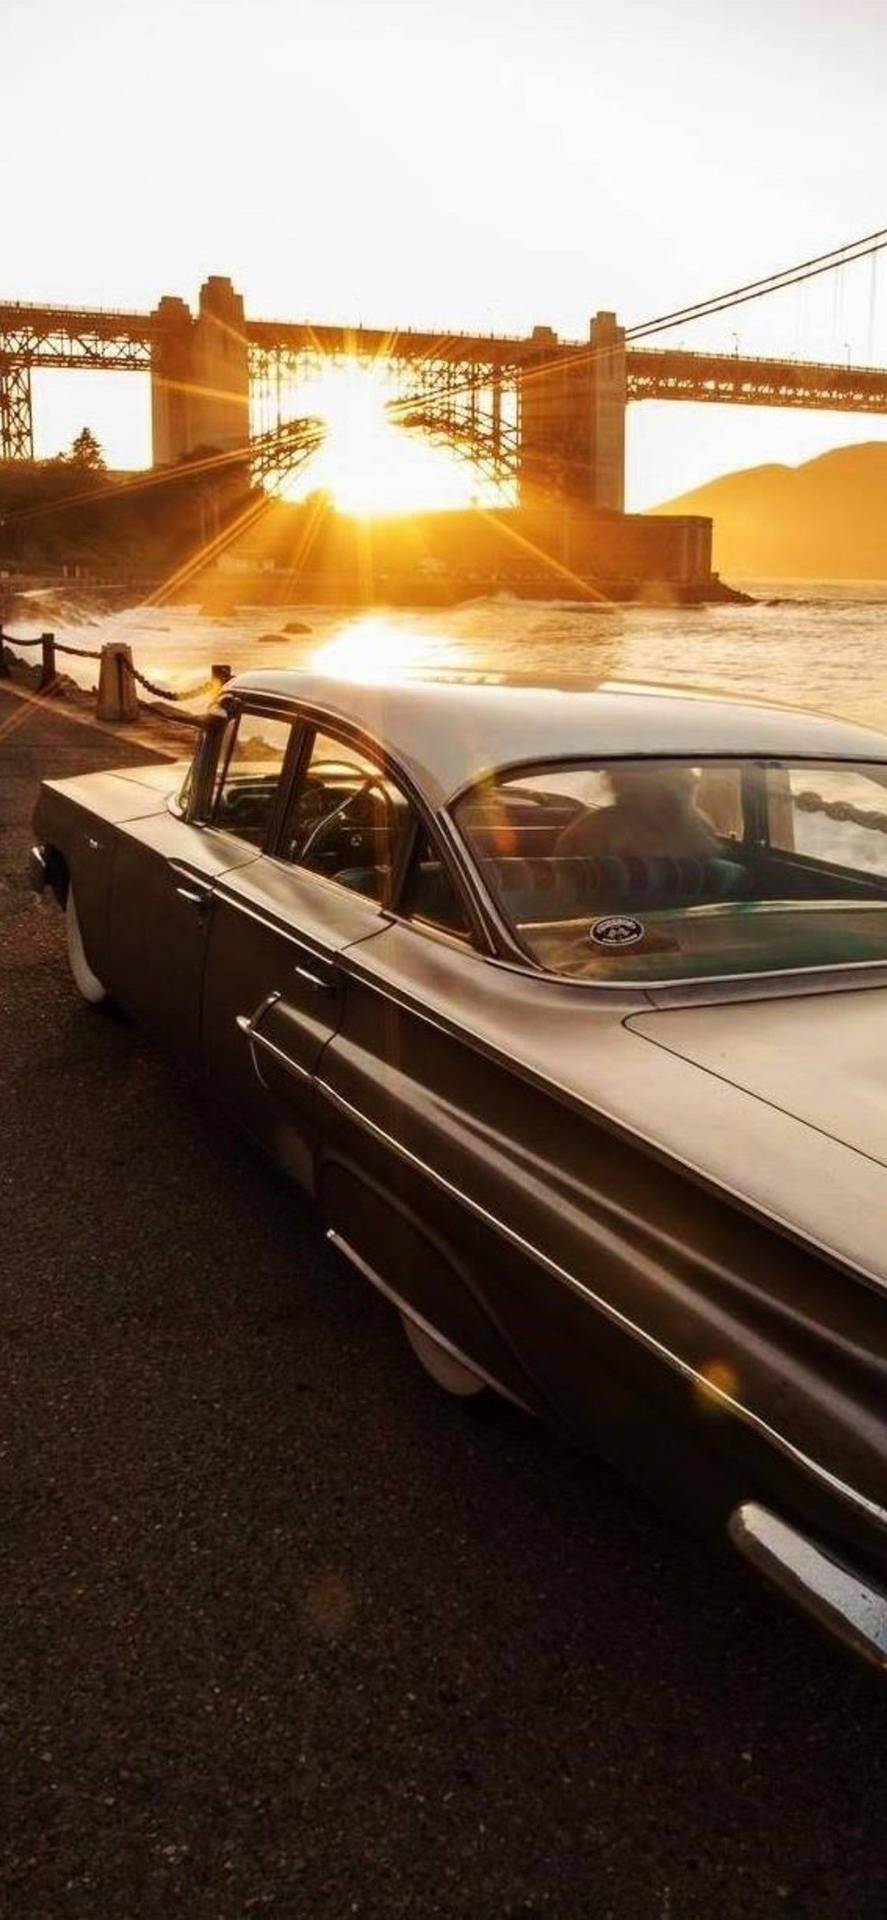 Vertical Vintage Cadillac Sunset Background